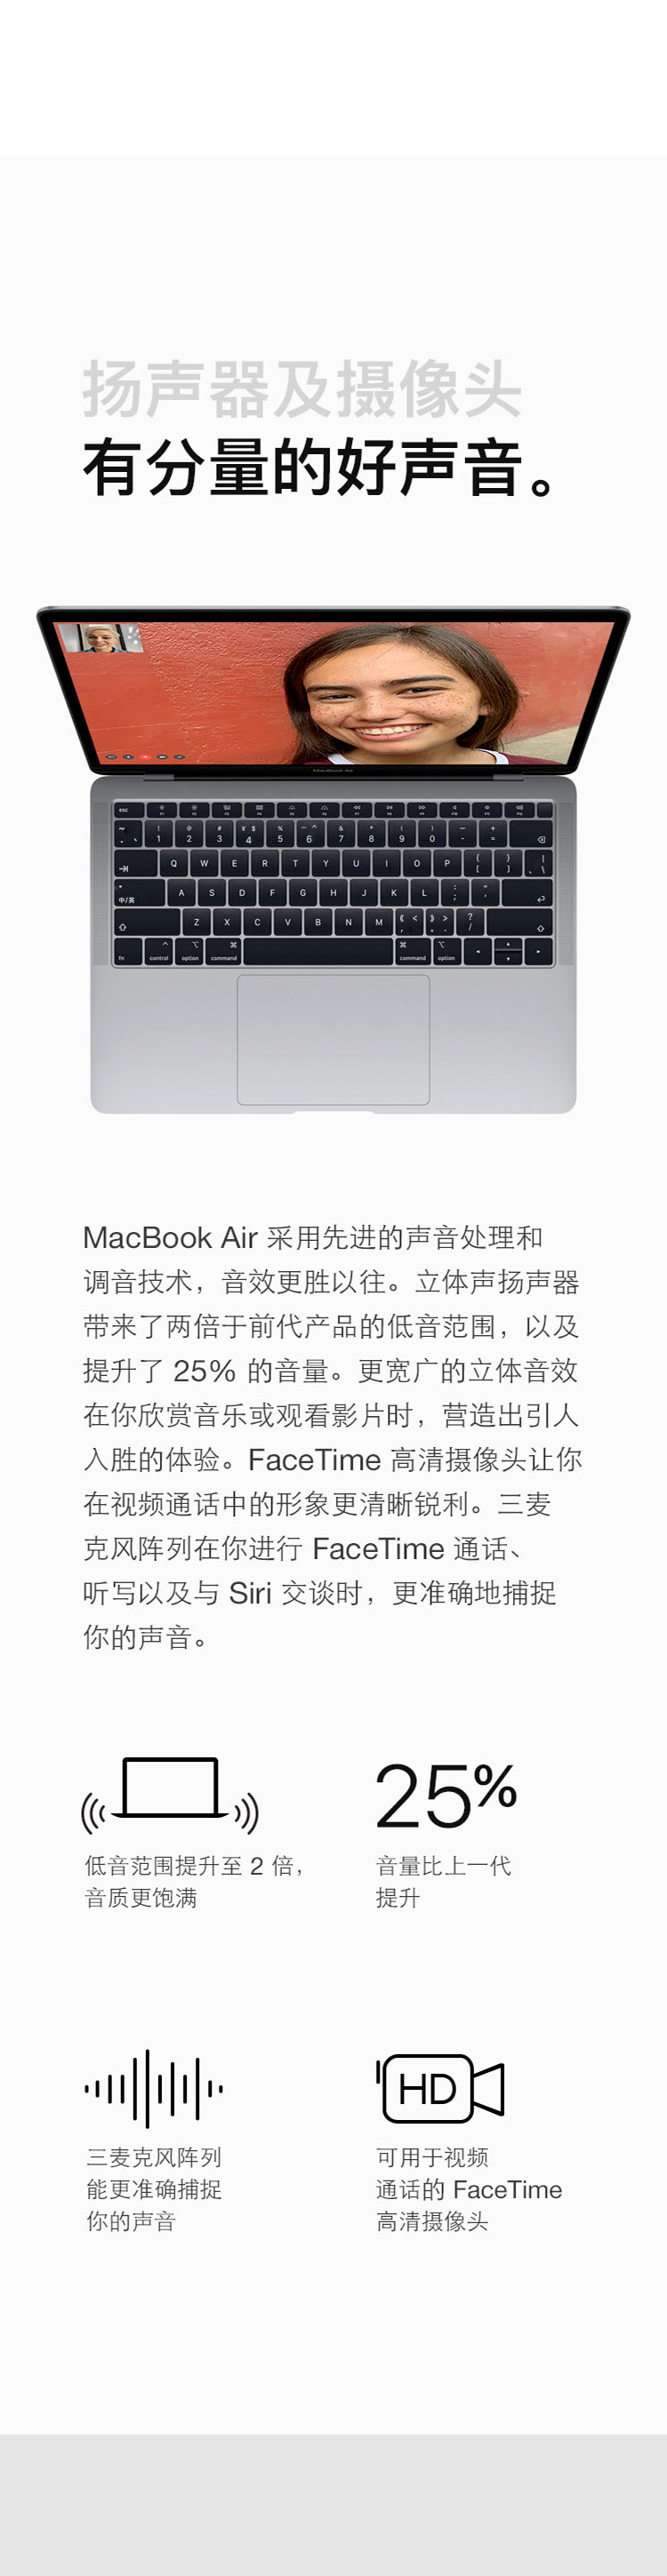 Apple MacBook Air 13.3英寸八代Core i5 /8GB内存/128GB闪存 笔记本电脑 深空灰色 2018款Retina屏 MRE82CH/A